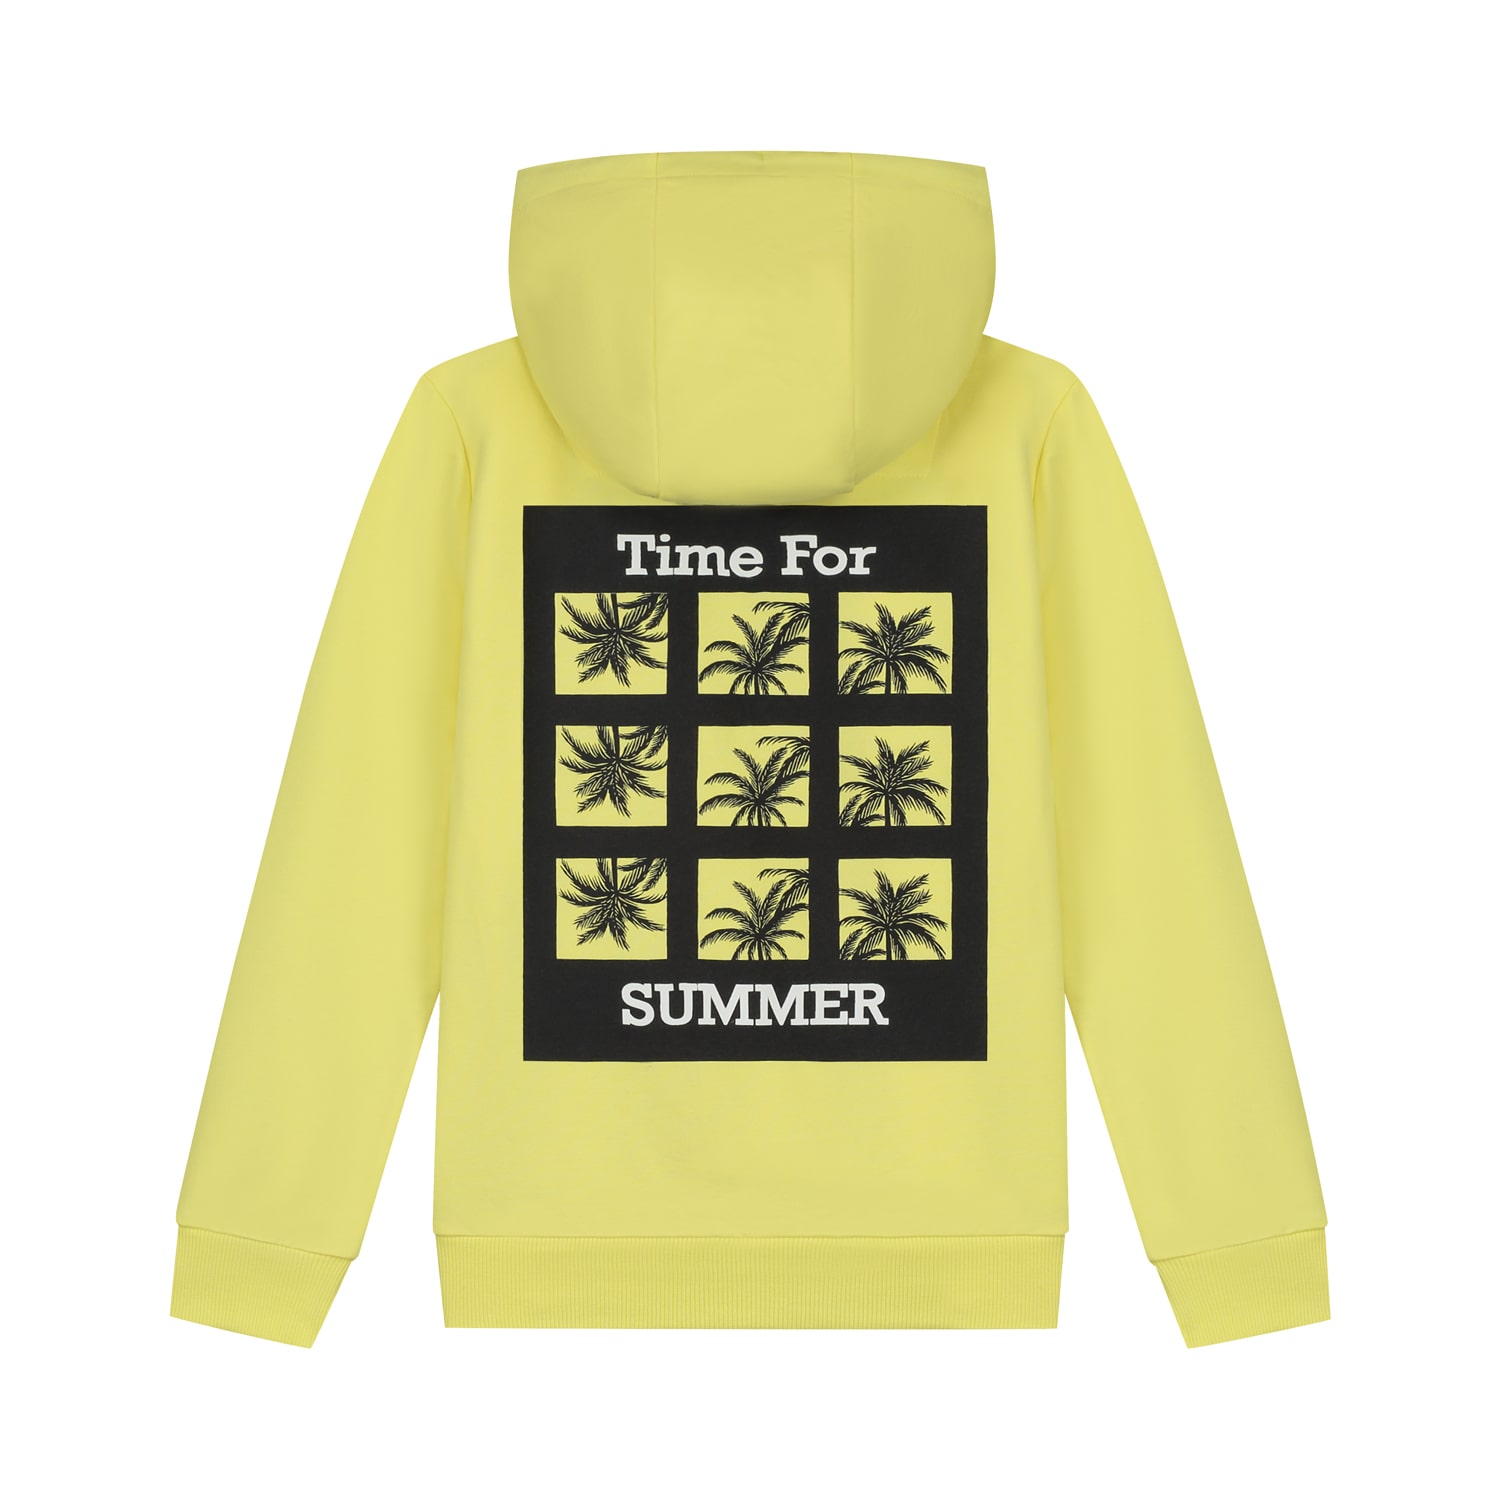 SKURK gele hoodie jongens